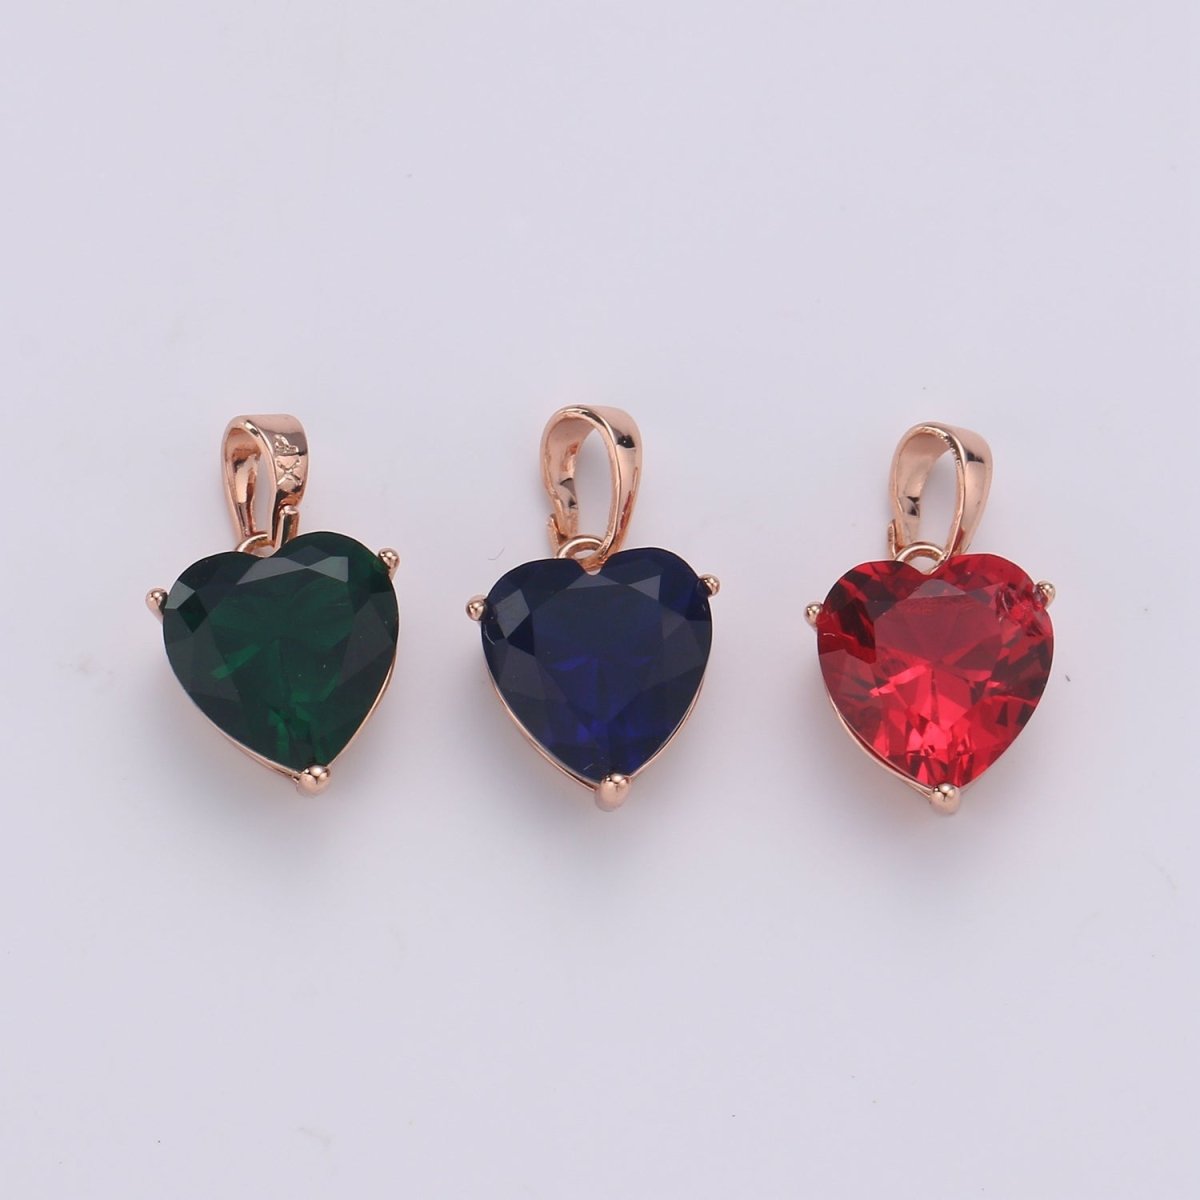 OS 18k Gold Fill Charm Pink Heart Cubic Zirconia Charm w/ Colored CZ Crystal Gem Stone GemStone Pendant Valentine Jewelry Supply J165 - DLUXCA